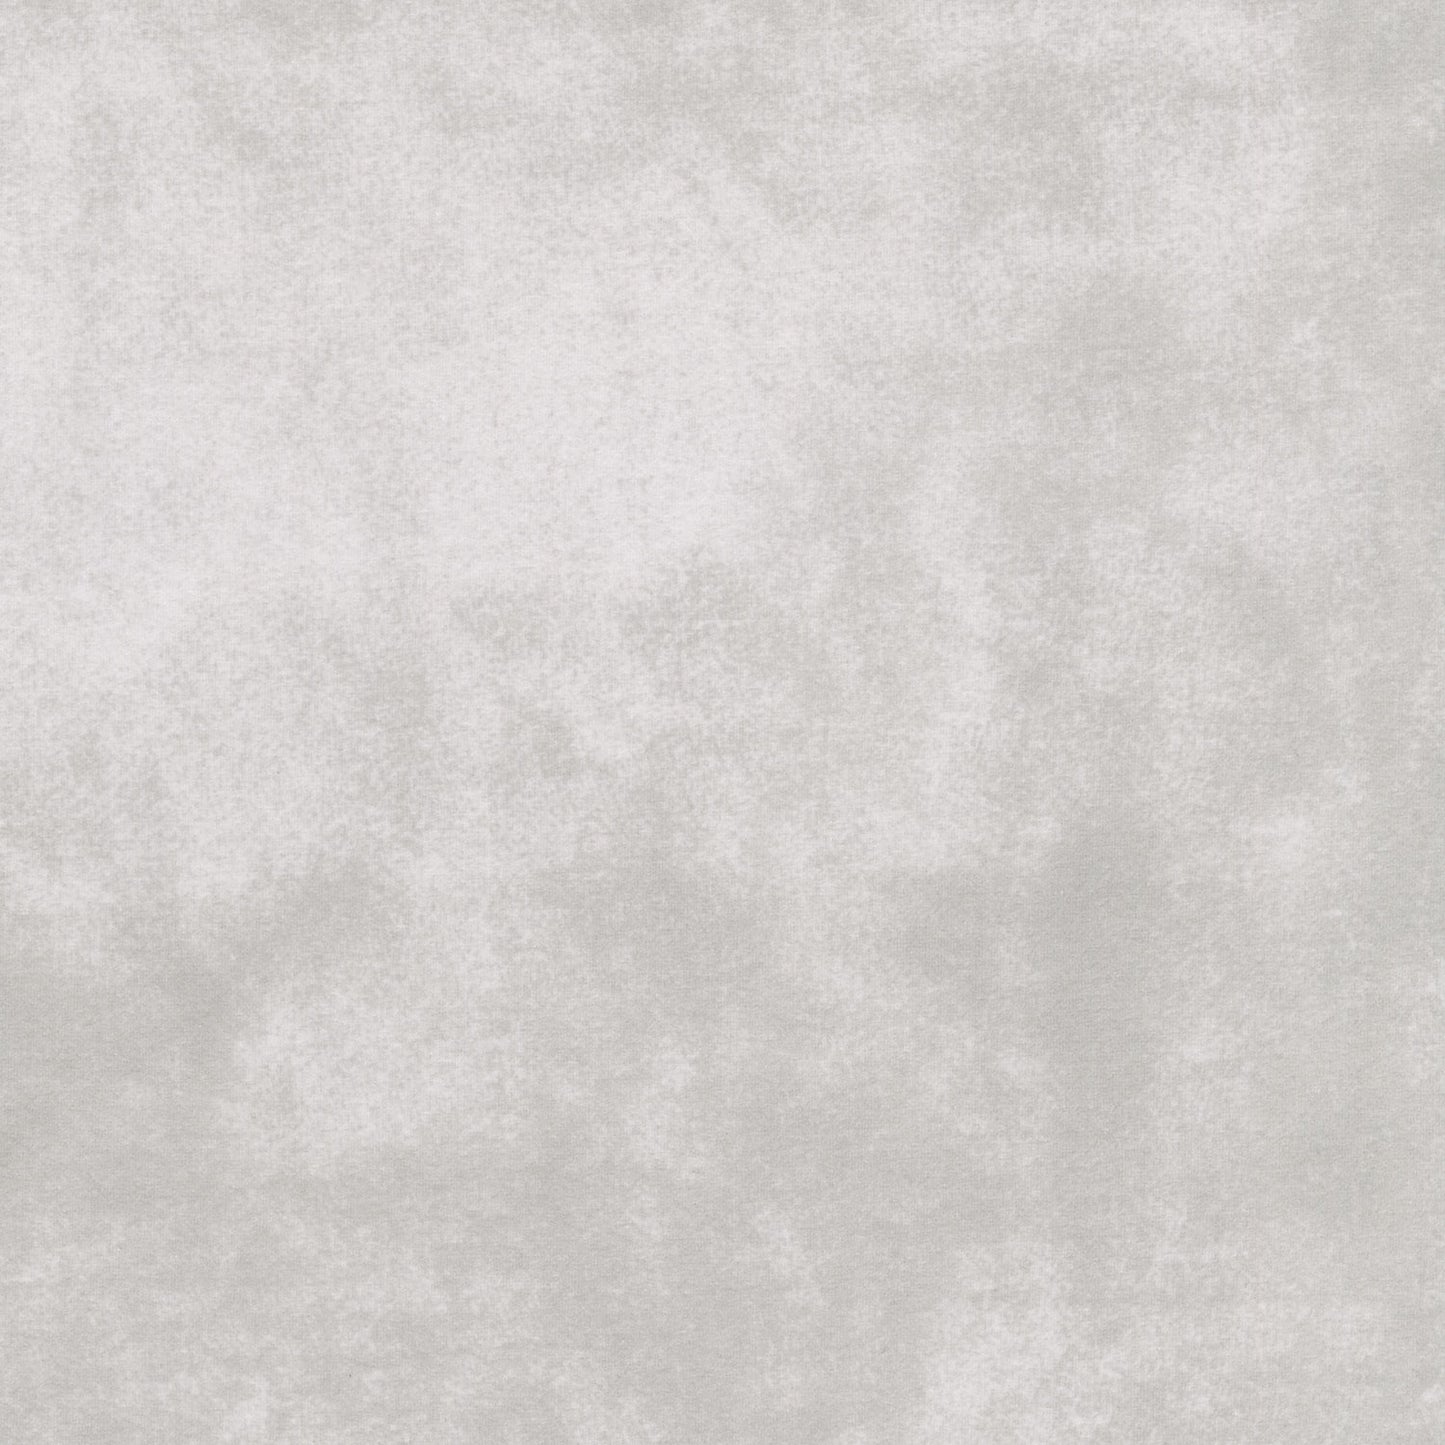 Woolies Flannel - Colorwash - Light Grey Yardage Primary Image